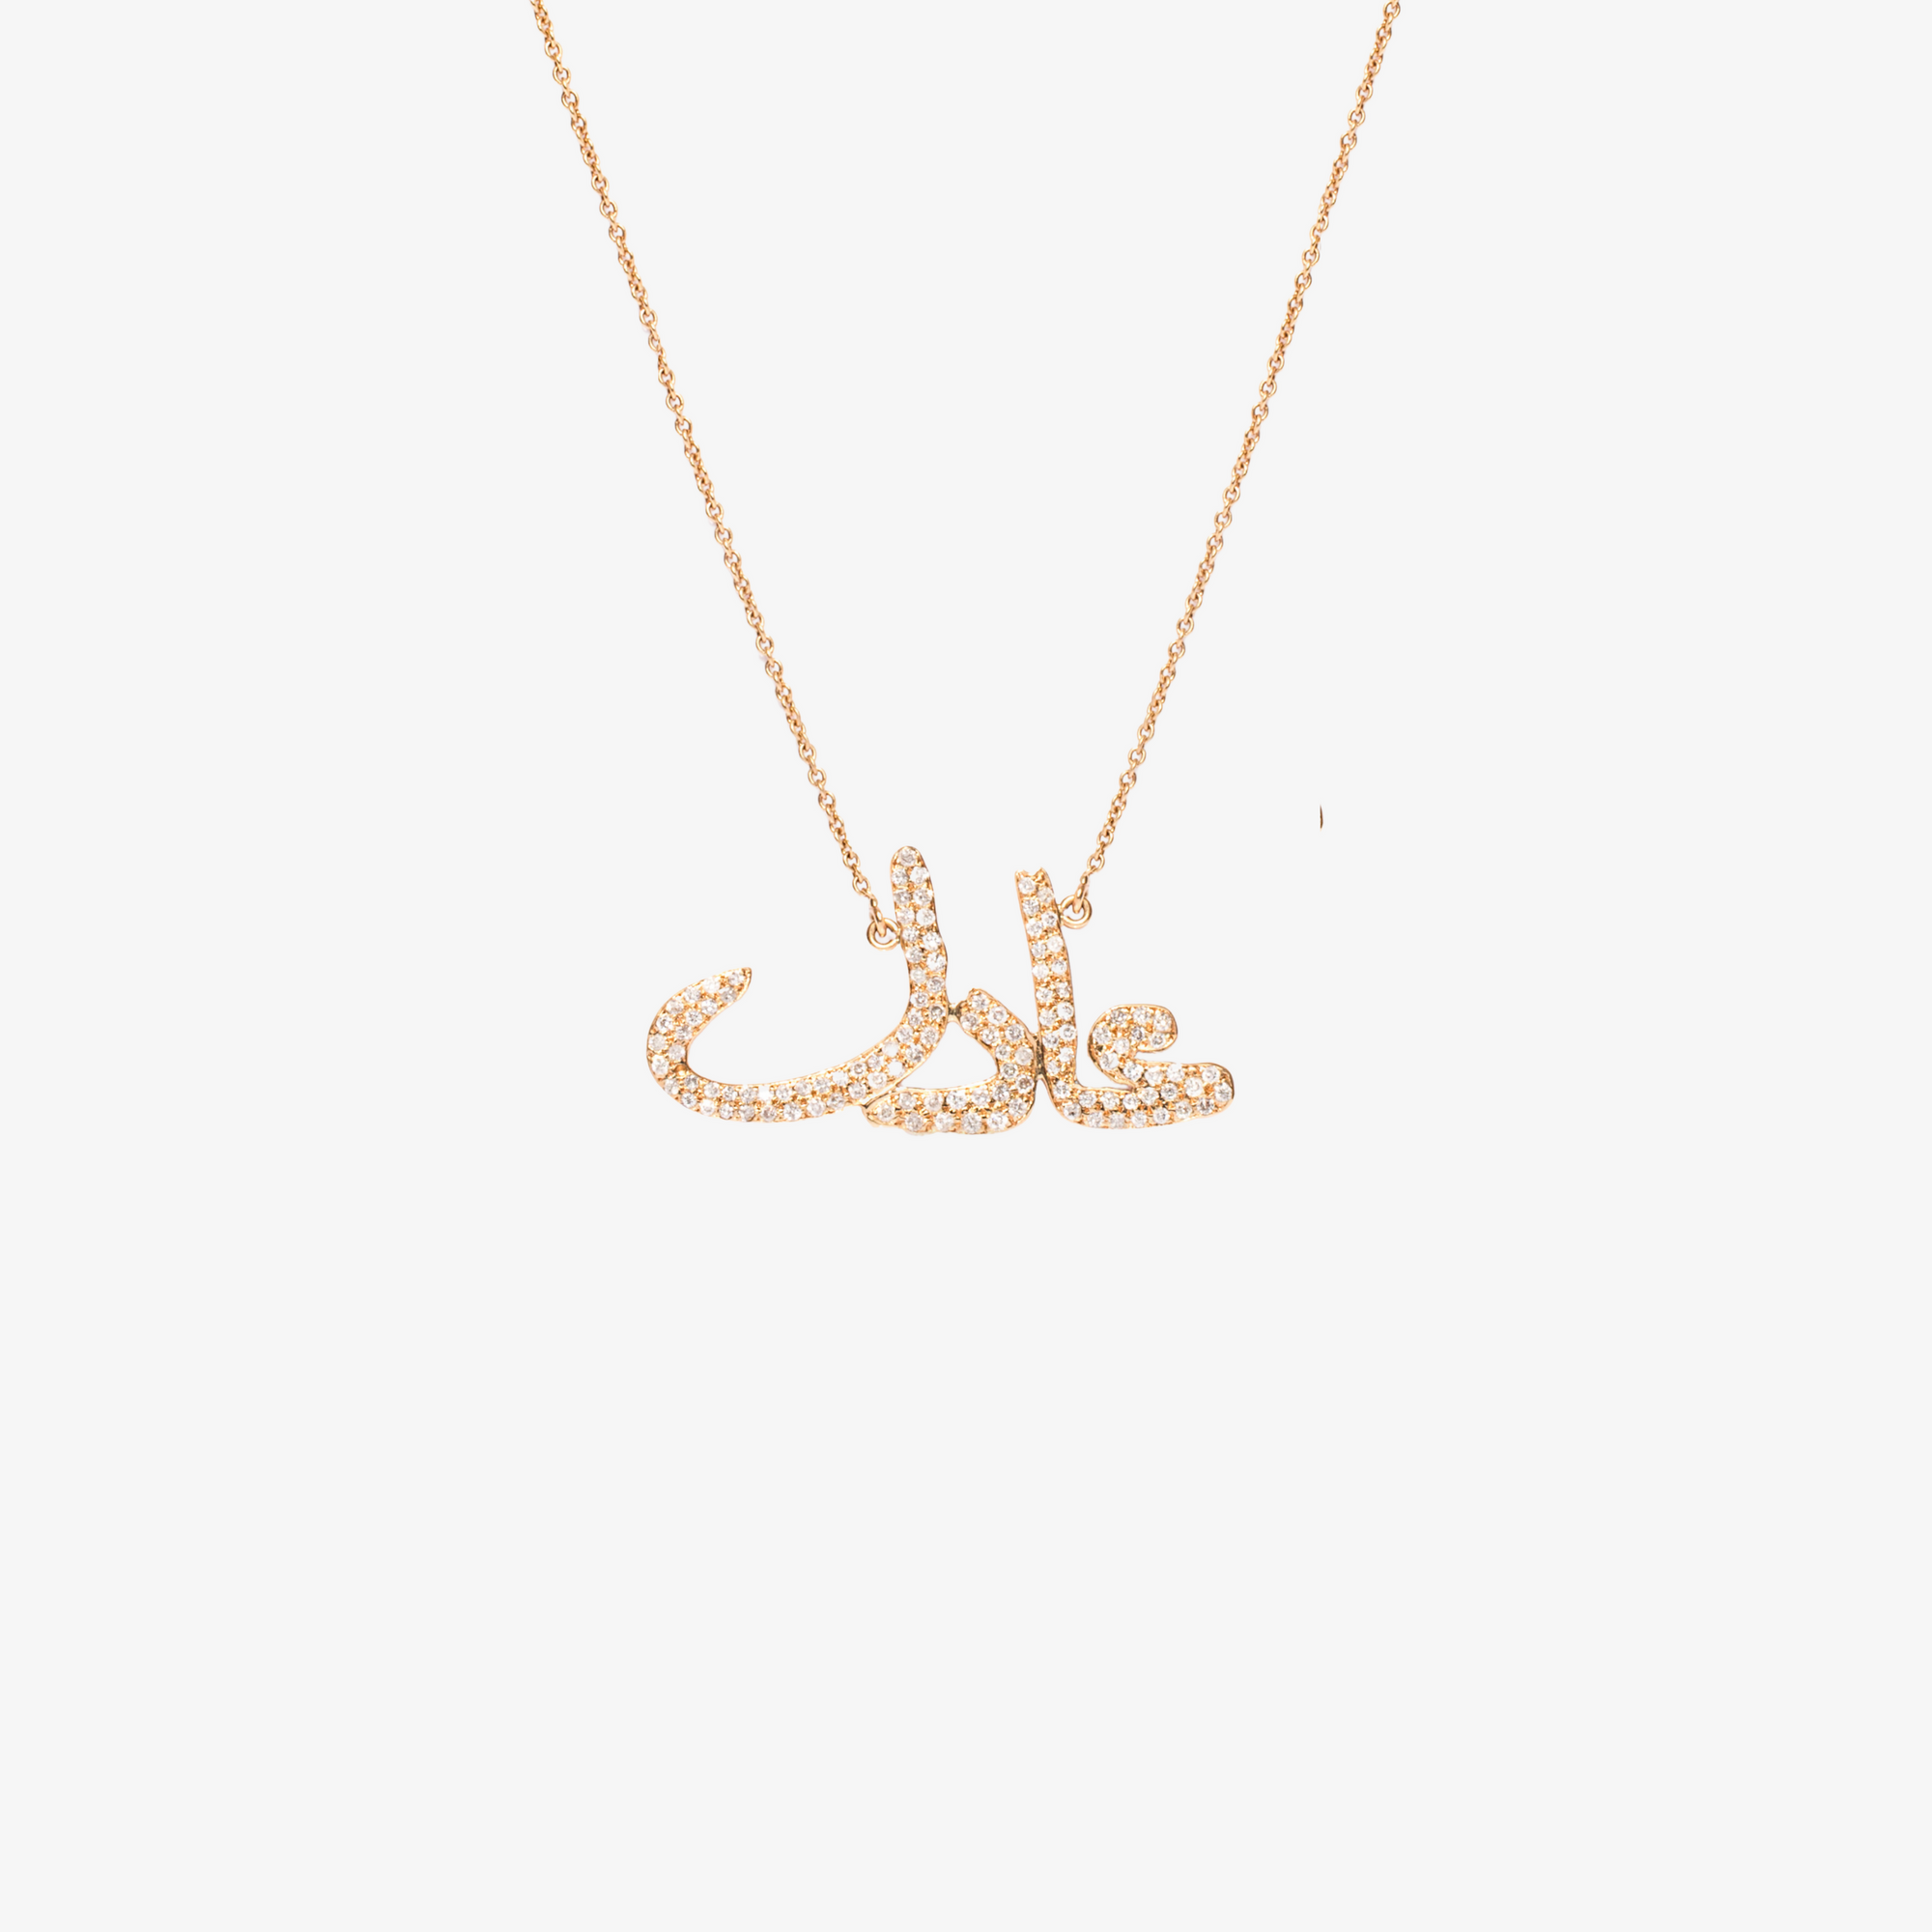 OULA - Customizable Diamond Necklace